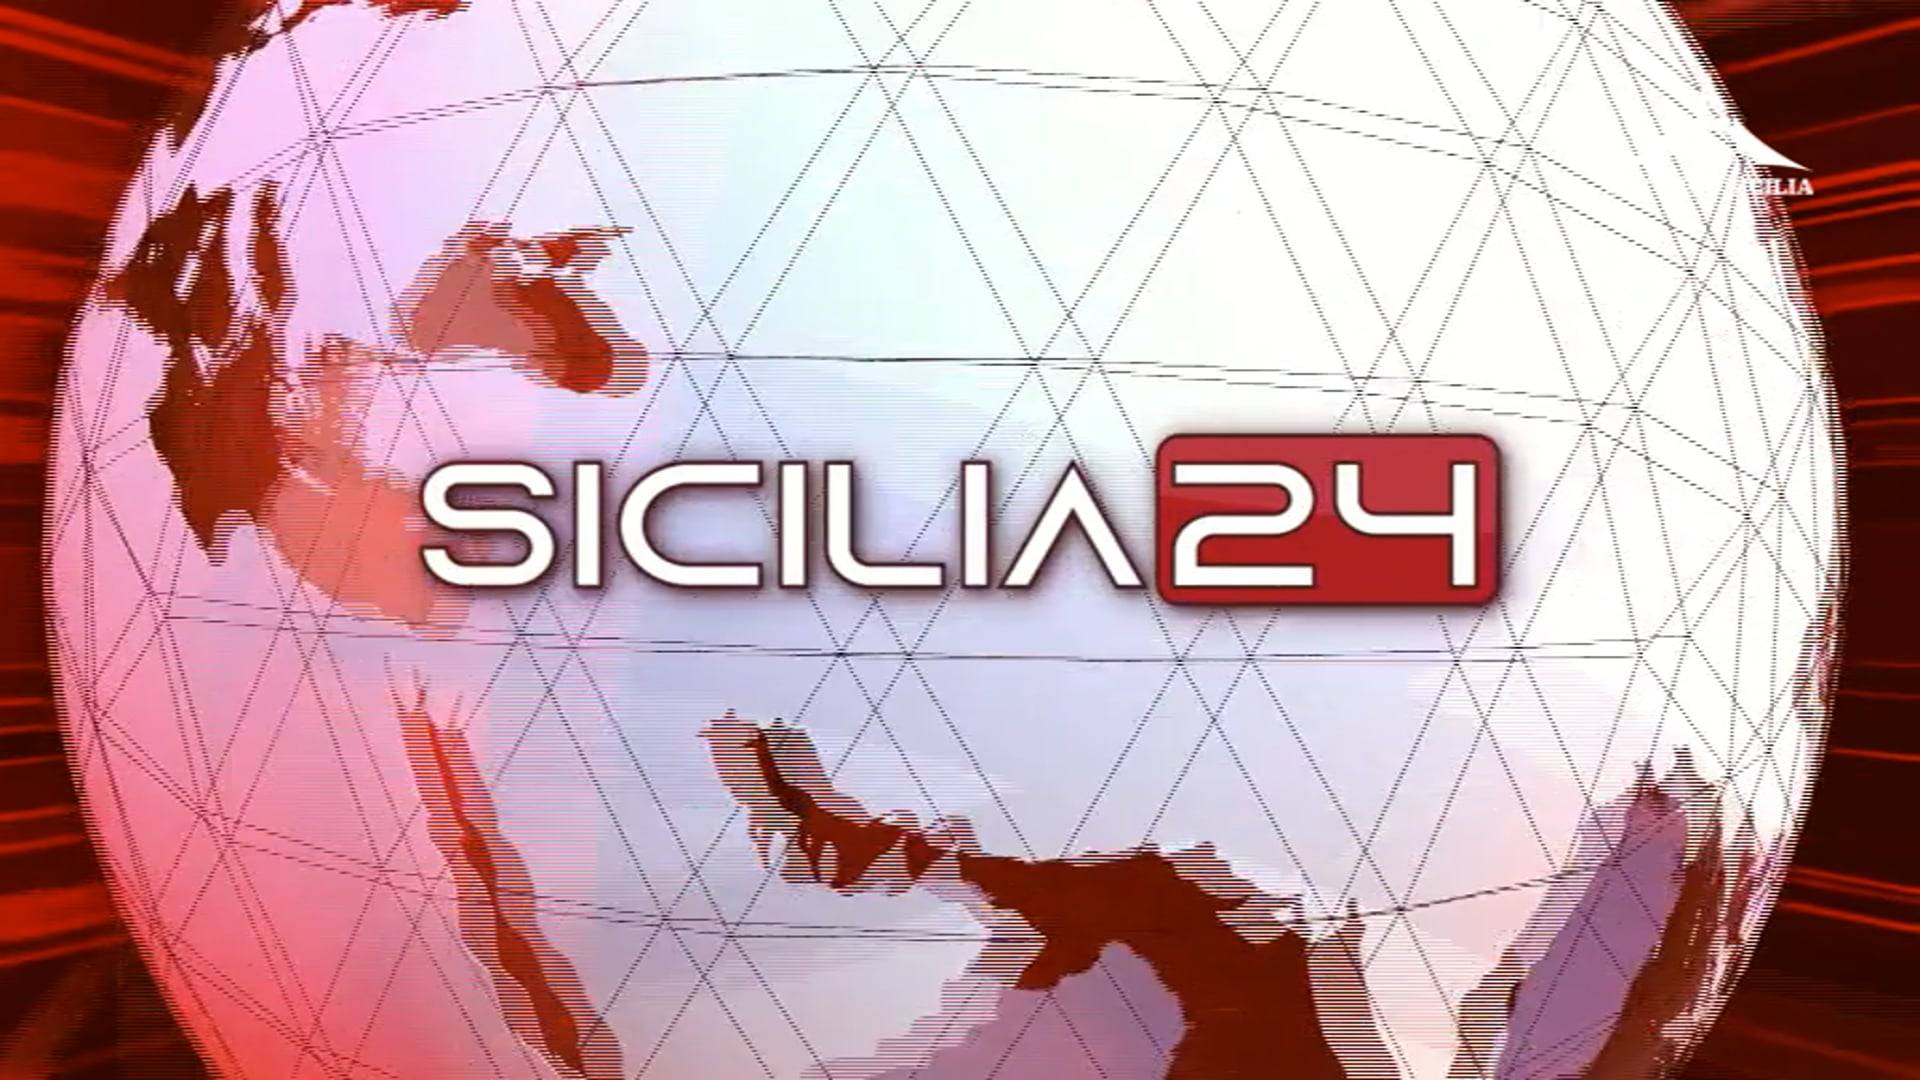 sicilia24-rassegna-stampa-14-marzo-2022-vimeo-thumbnail.jpg